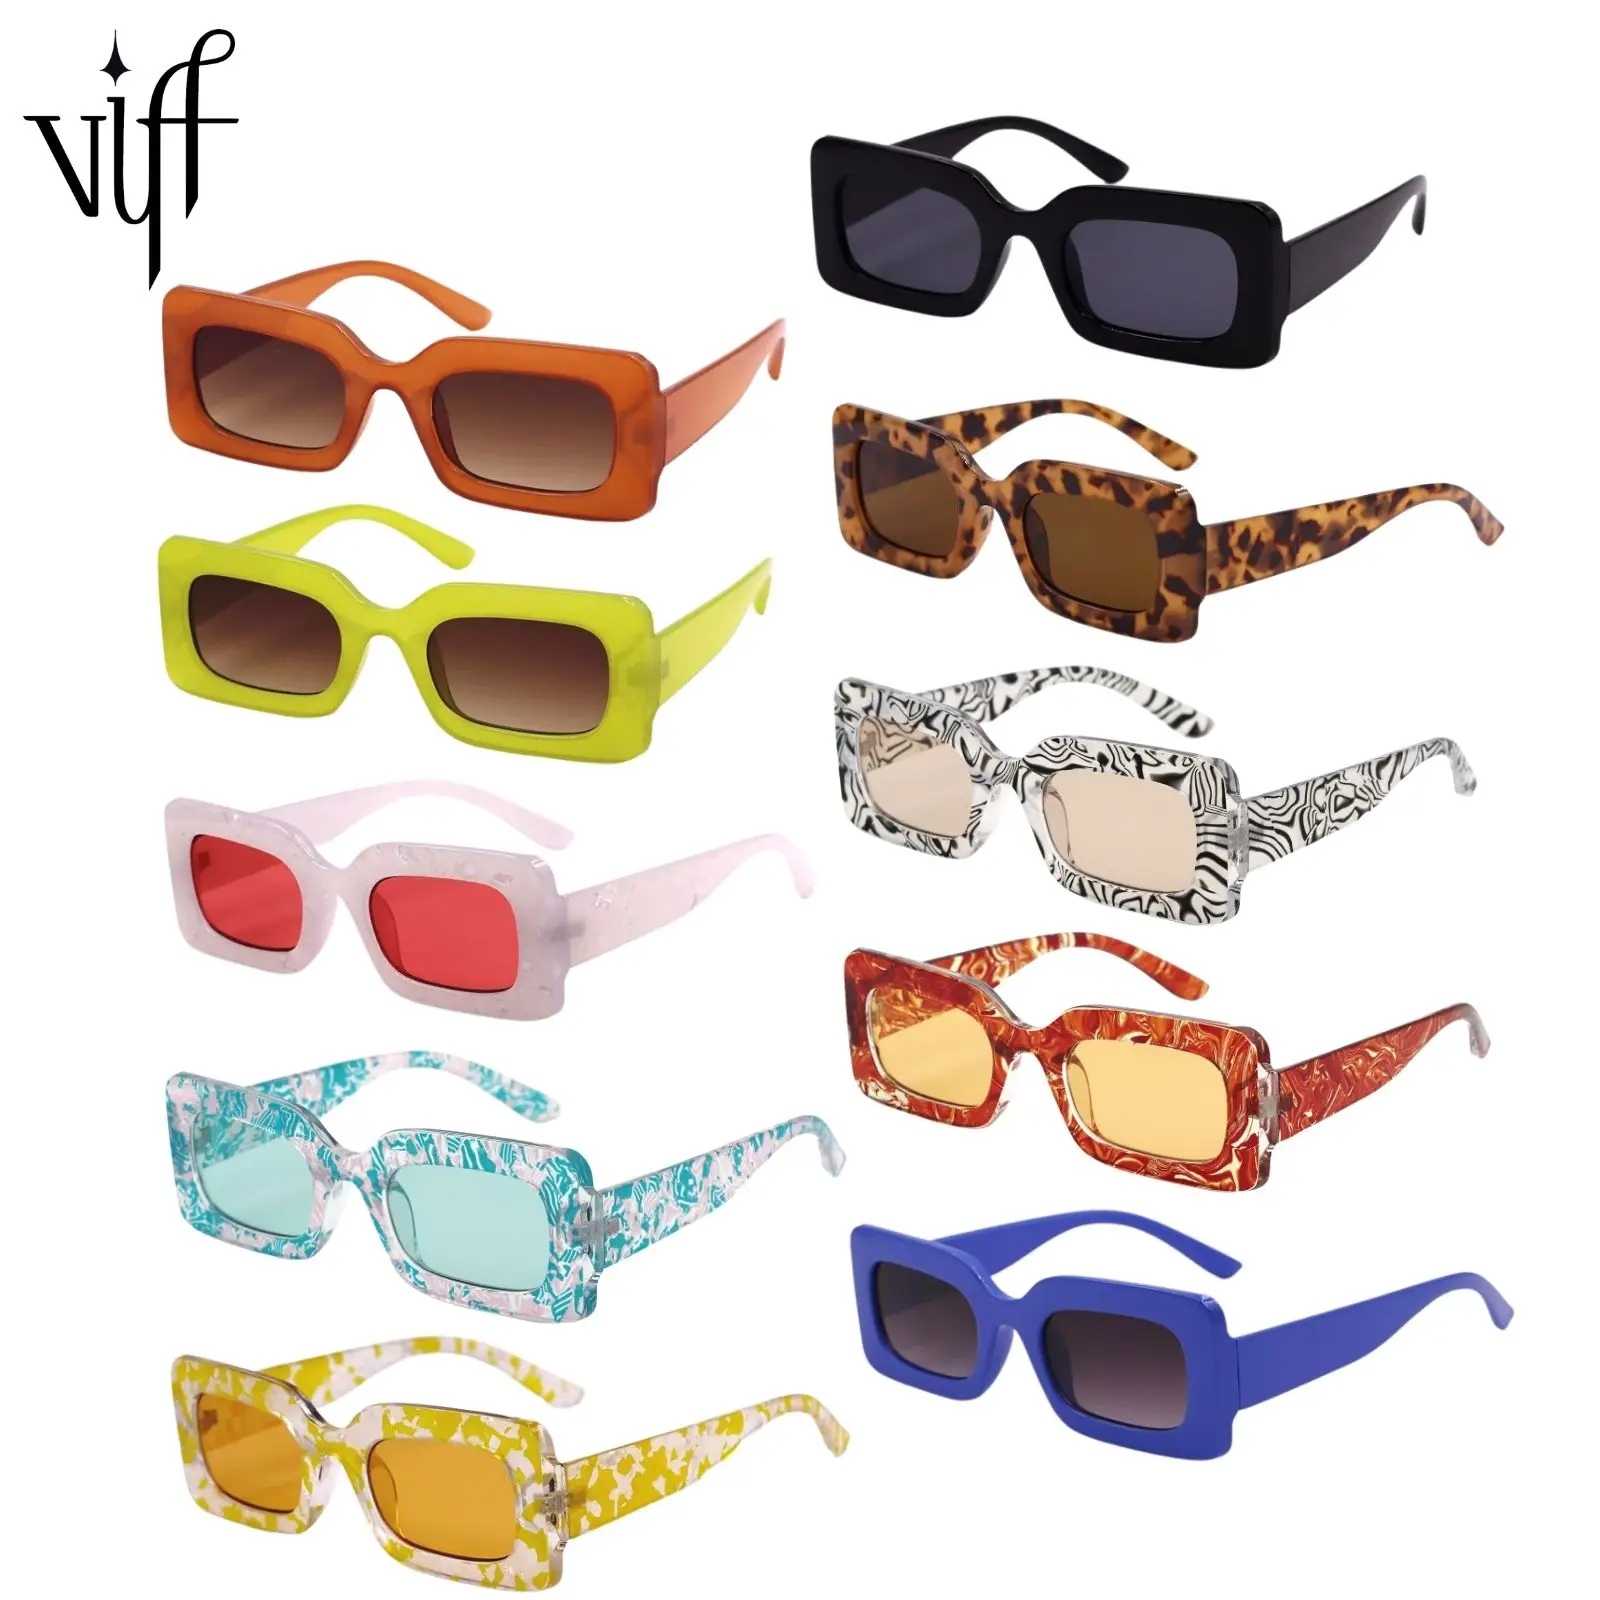 

VIFF HP21208 Women Fashion 2021 Sun Glasses River Shades Designer Free Shipping Colorful Sunglasses 2021, Multi and oem